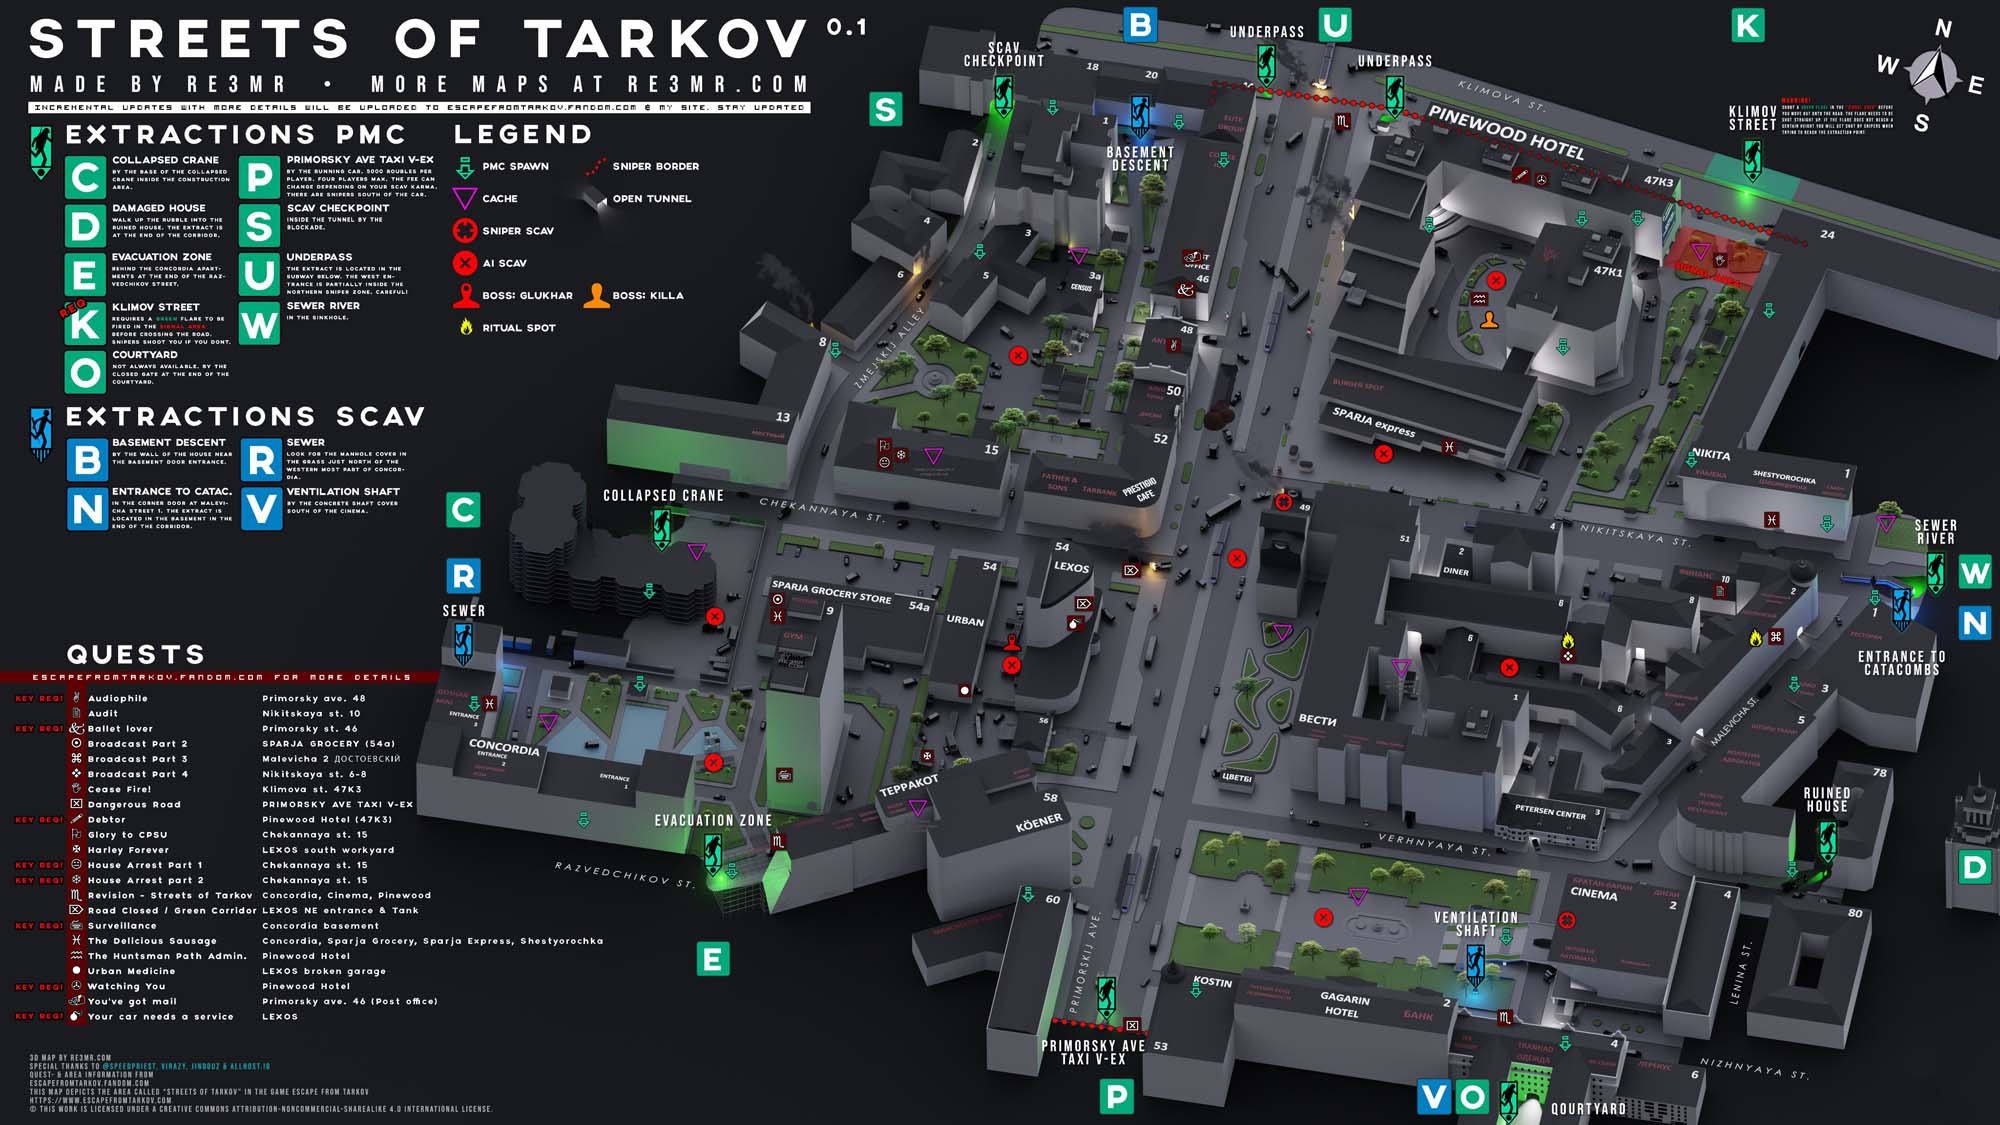 Streets of Tarkov - by reemr.se